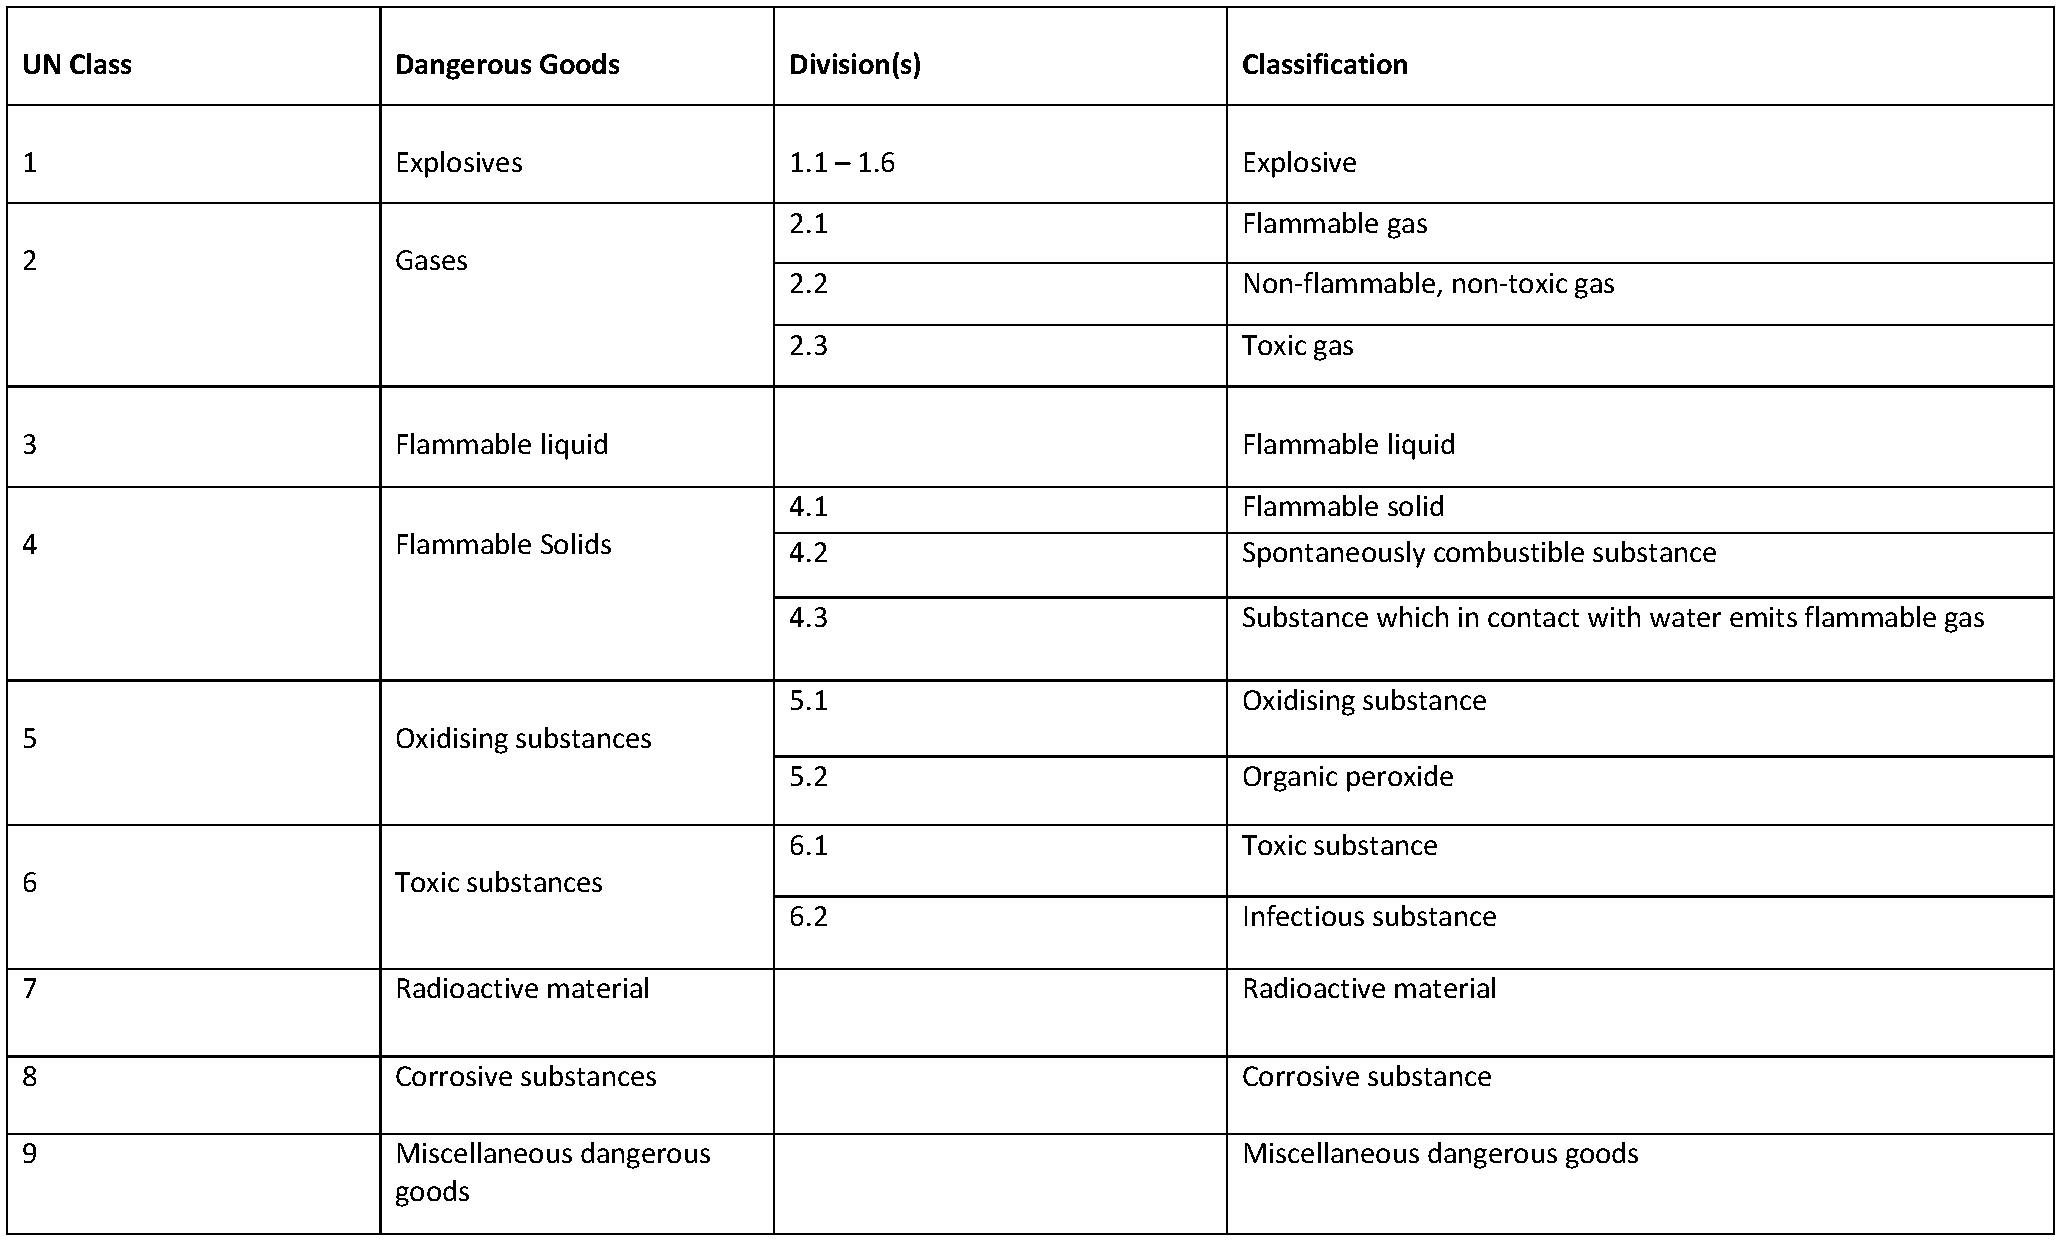 Table of Hazardous Materials Classification